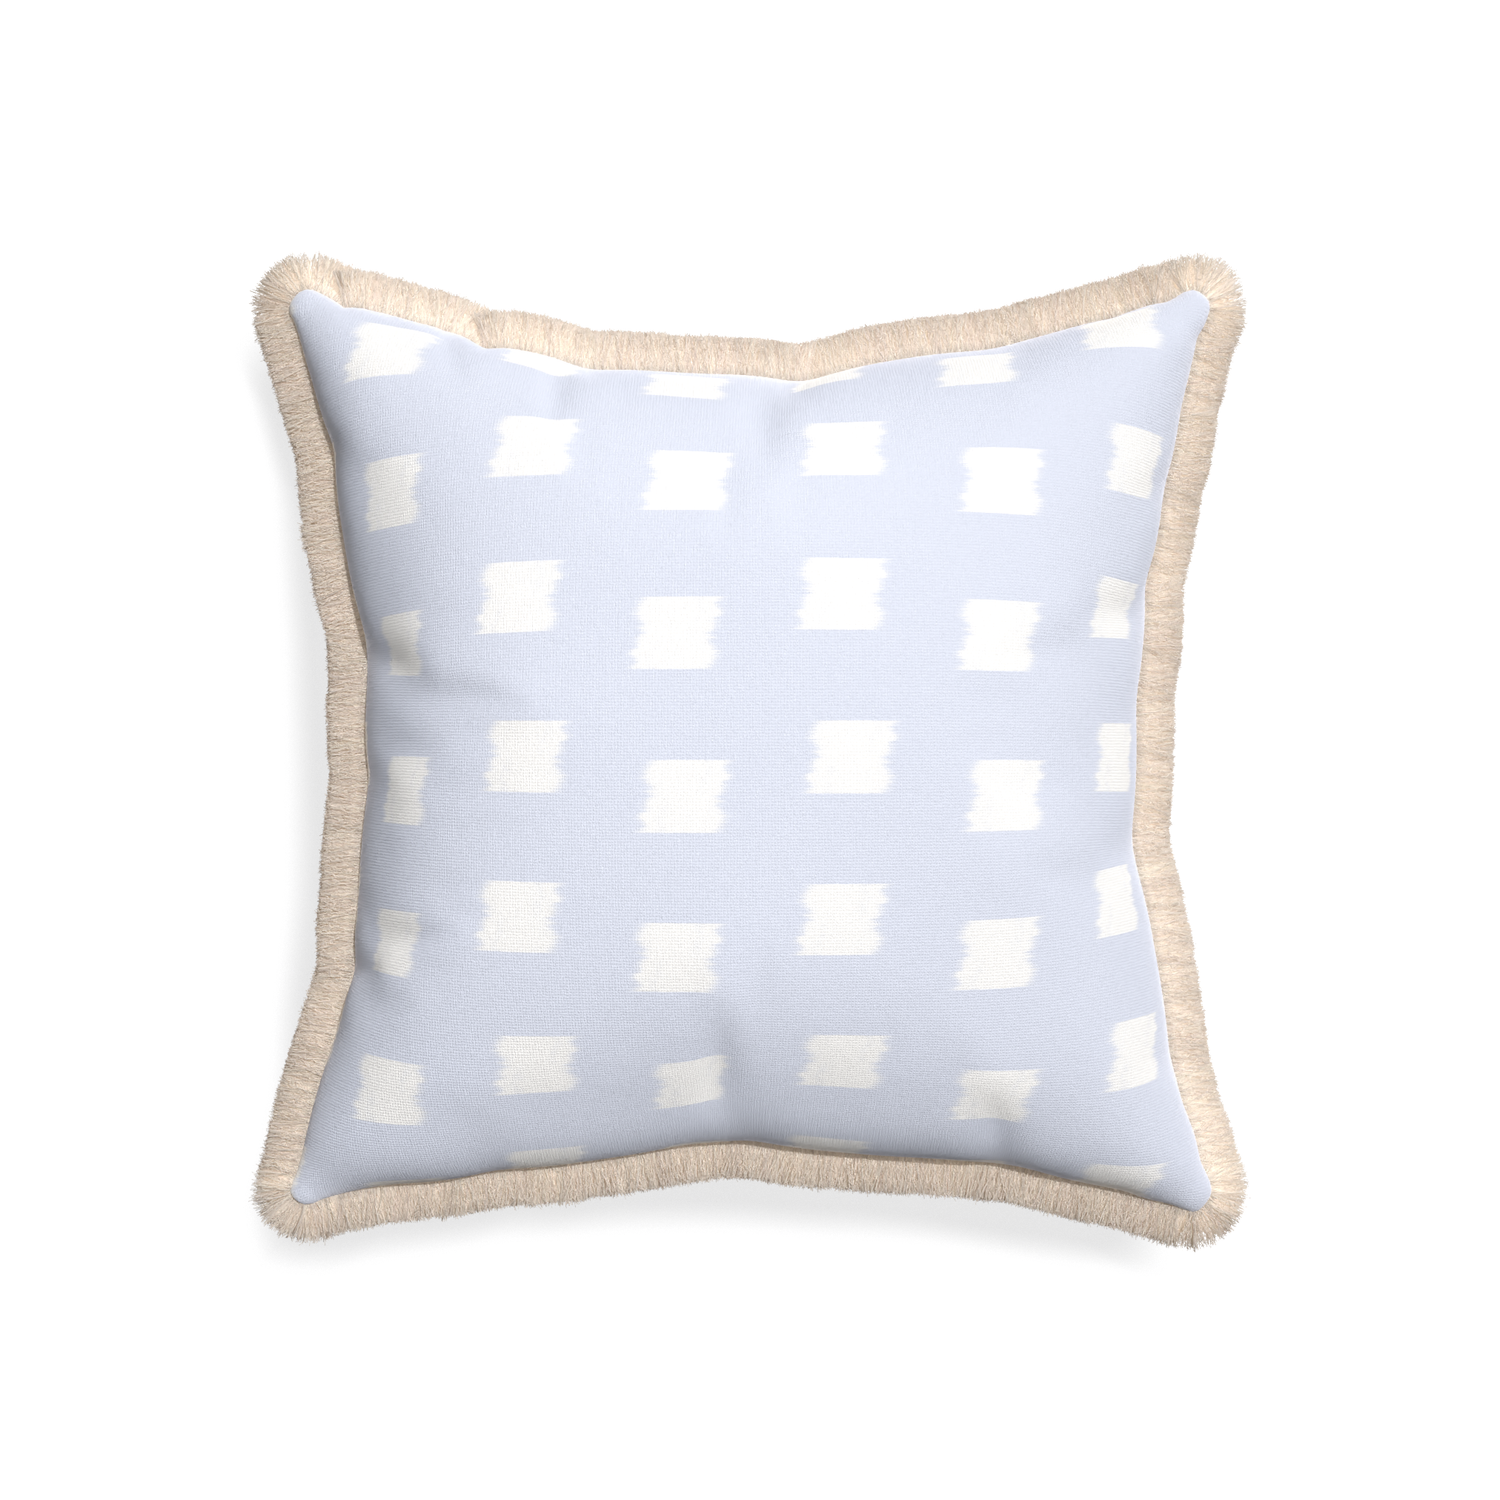 20-square denton custom pillow with cream fringe on white background